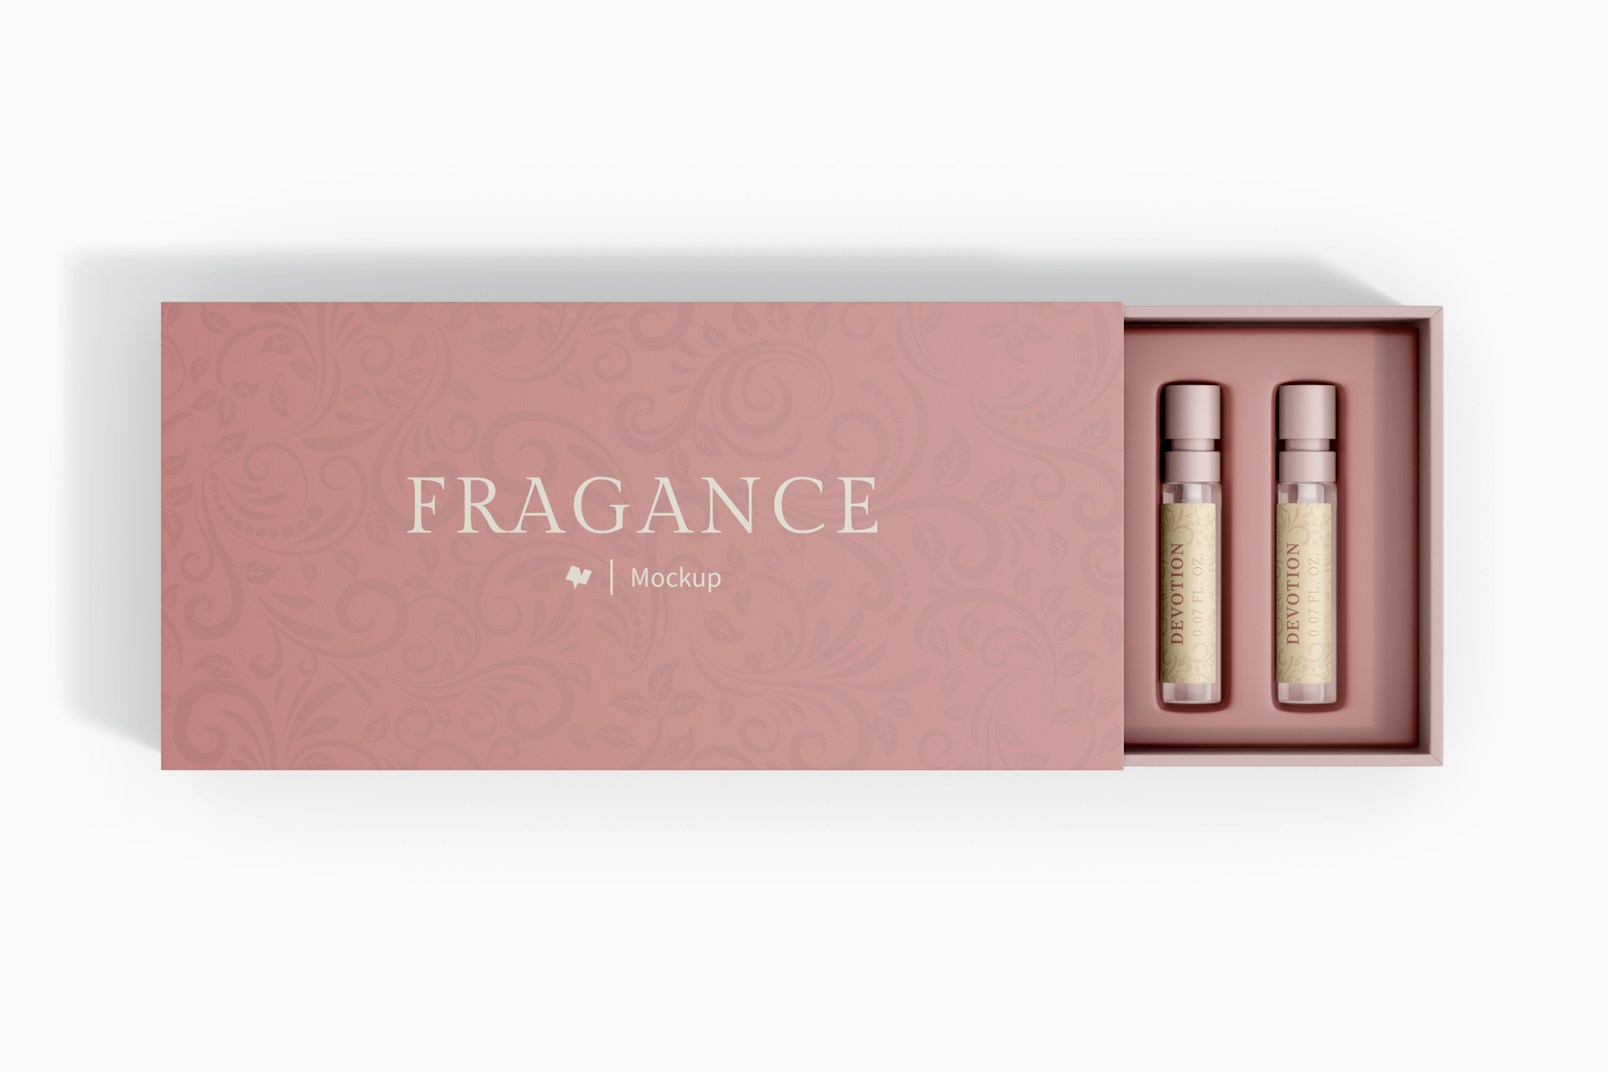 Fragrance Sample Box Mockup, Top View